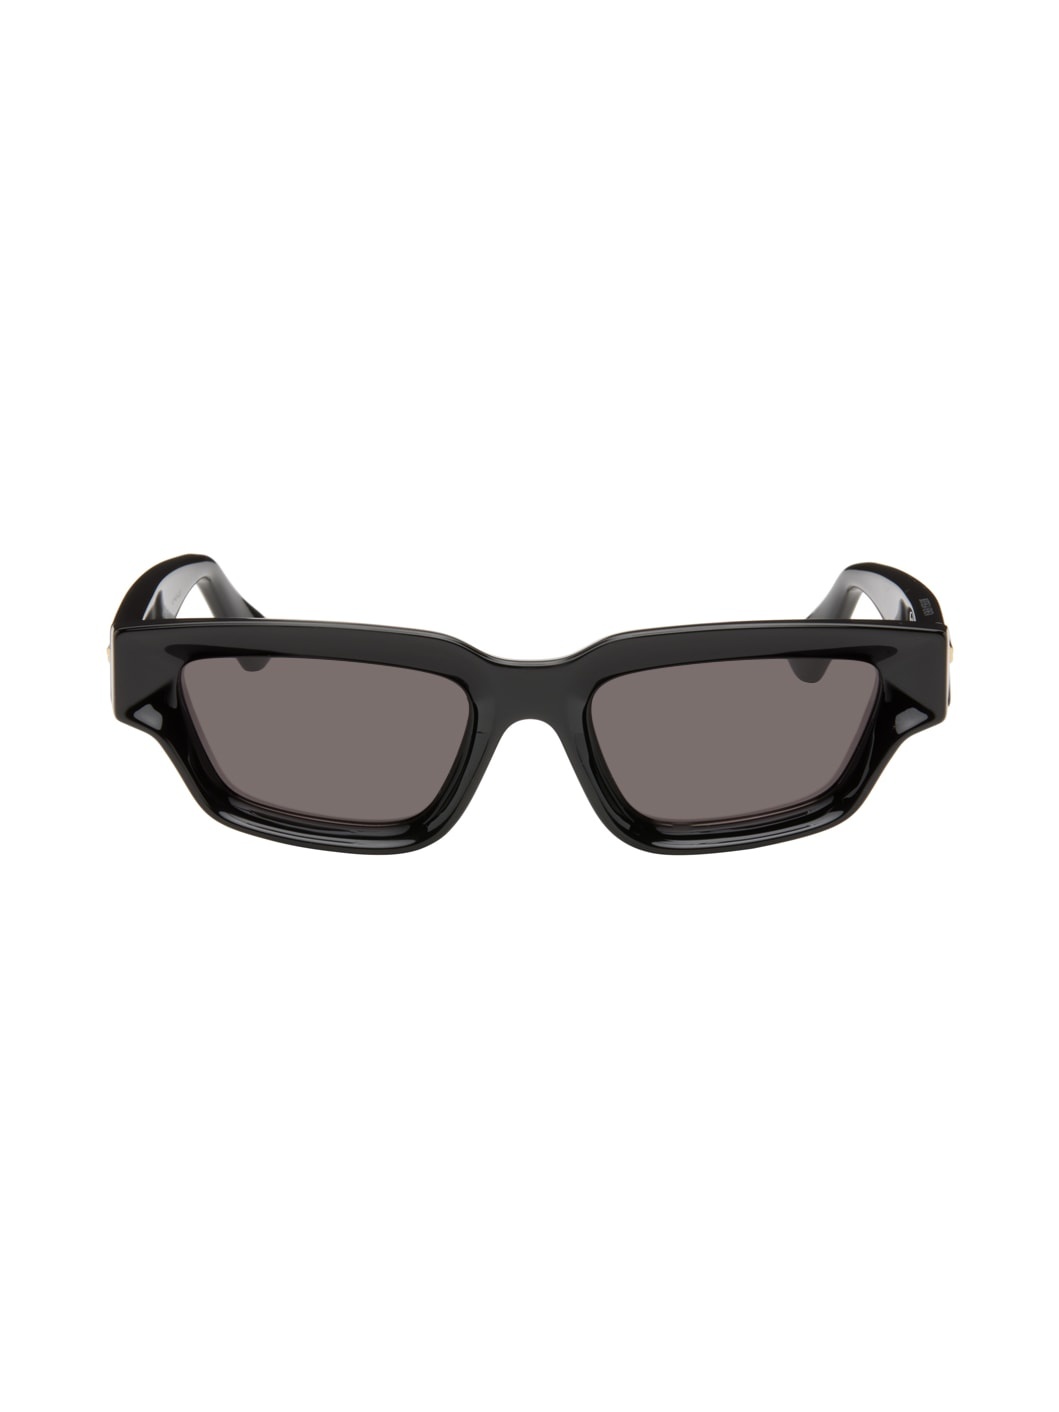 Black Sharp Square Sunglasses - 1